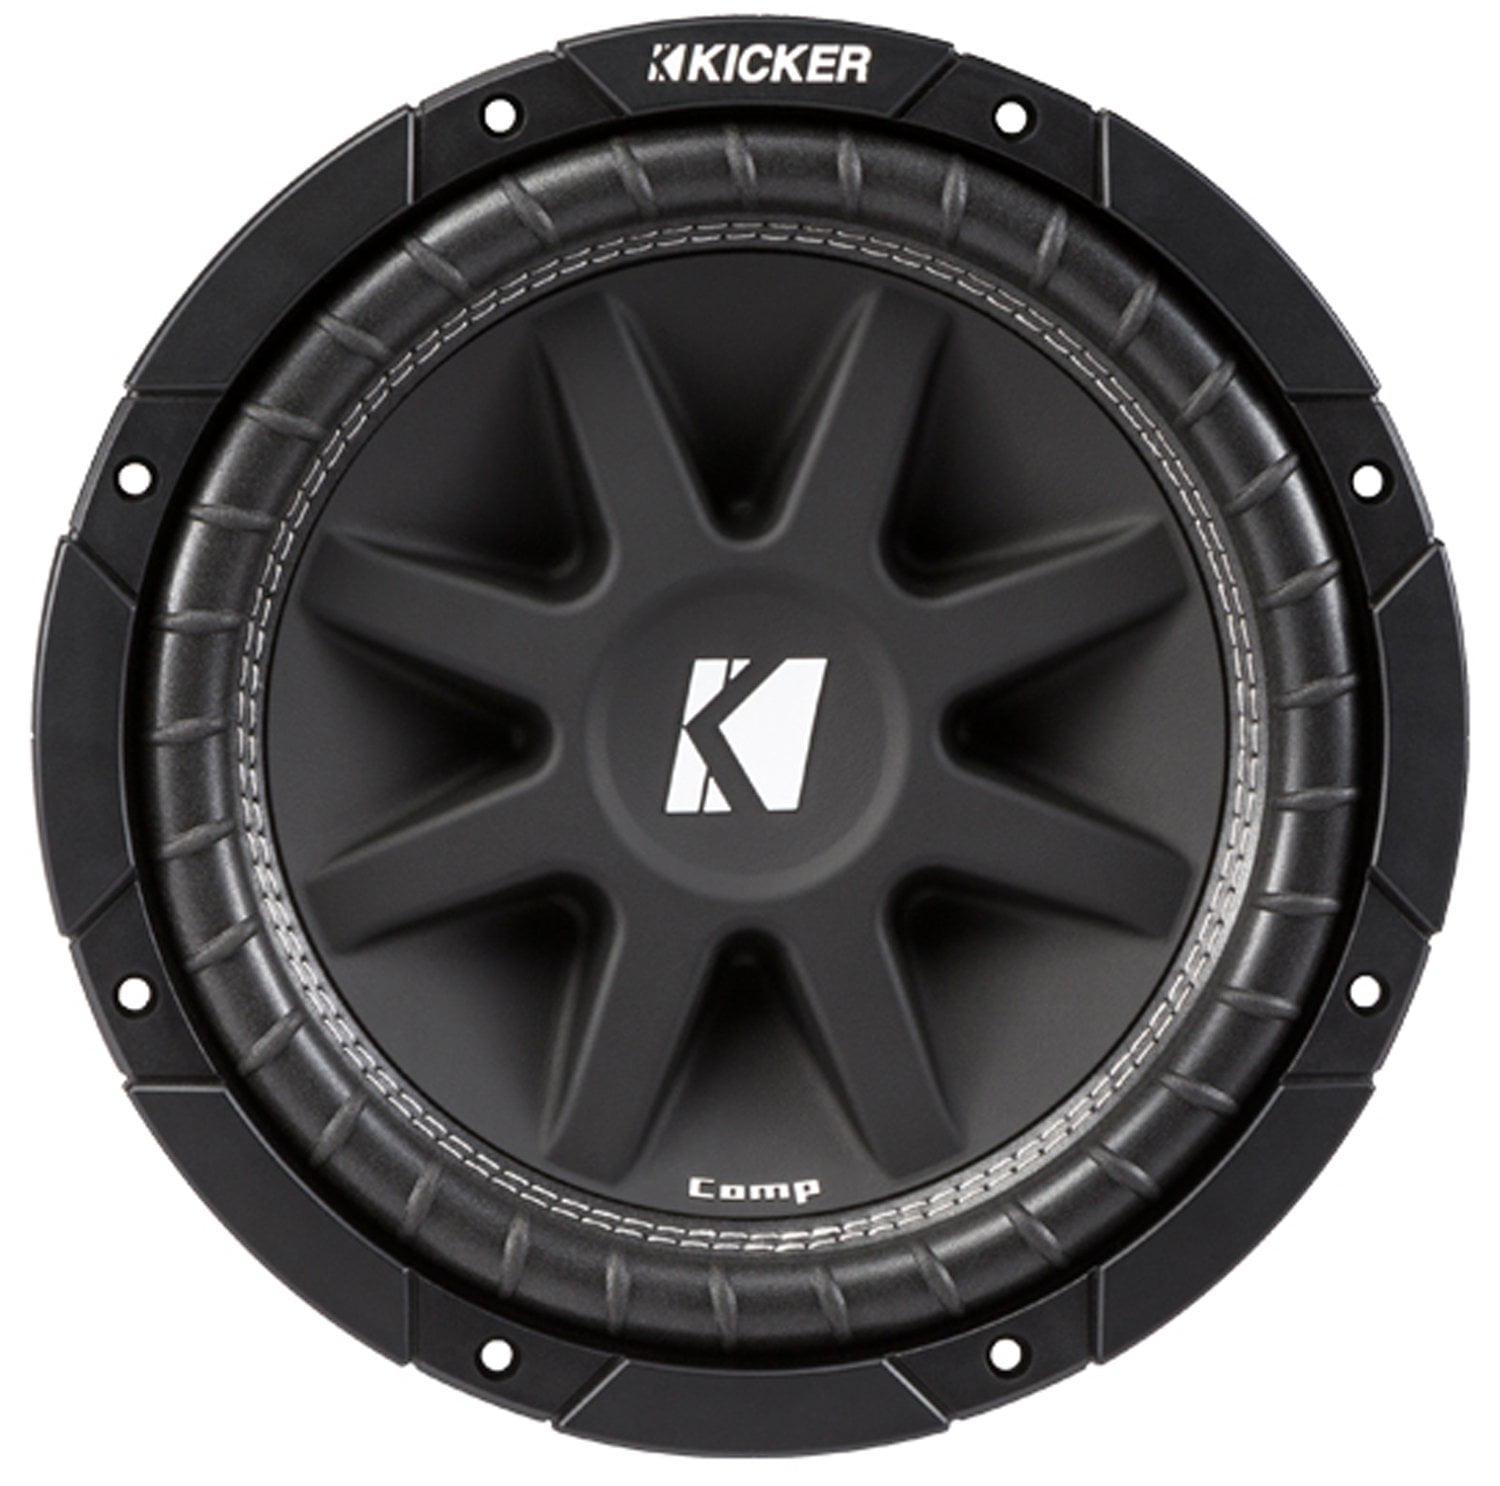 KICKER 43C124 Comp 12" 600 Watt SVC 4-Ohm Car Audio Subwoofers Subs 2 